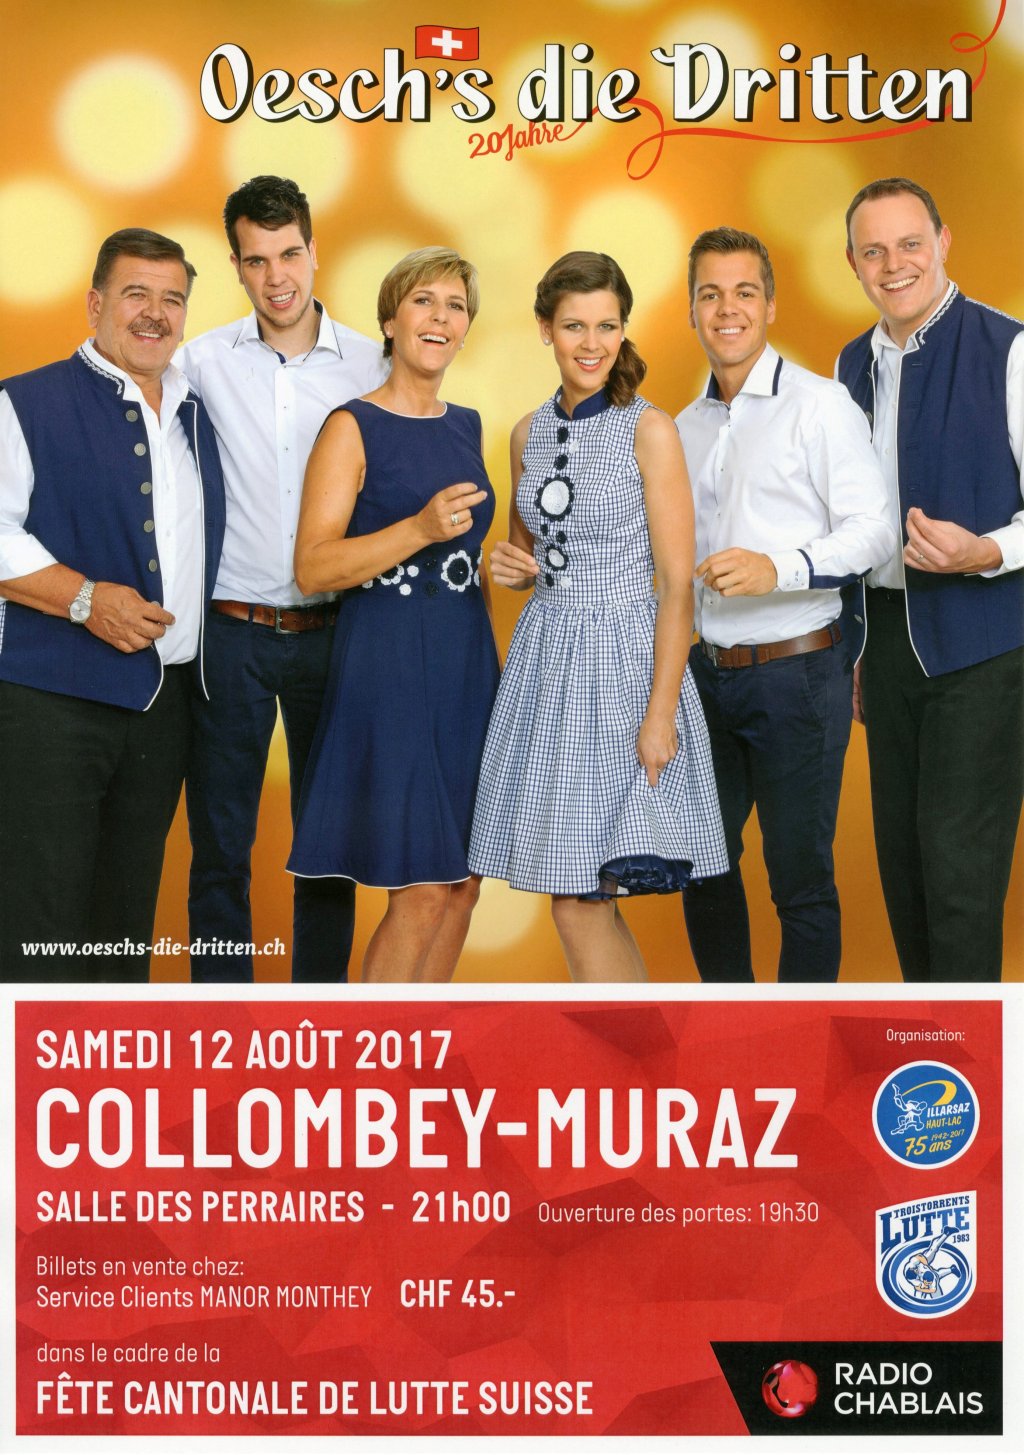 Fête de lutte suisse + Concert Oesch's die Dritten Collombey 12-13.08.17